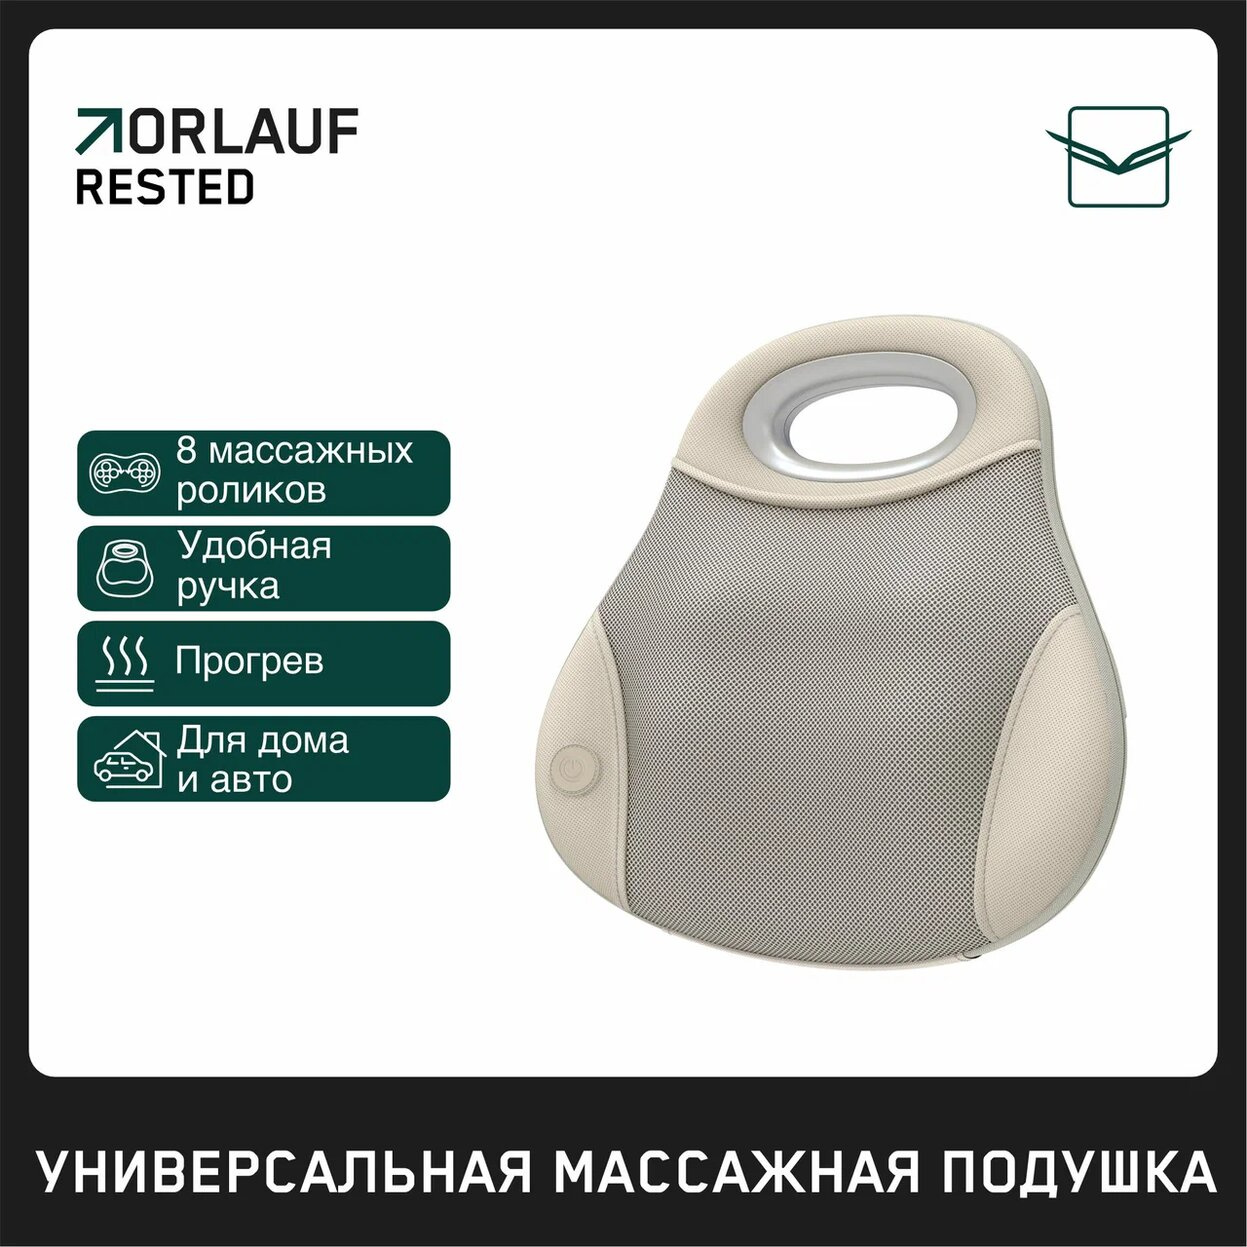 Orlauf Rested из каталога устройств для массажа в Казани по цене 11900 ₽